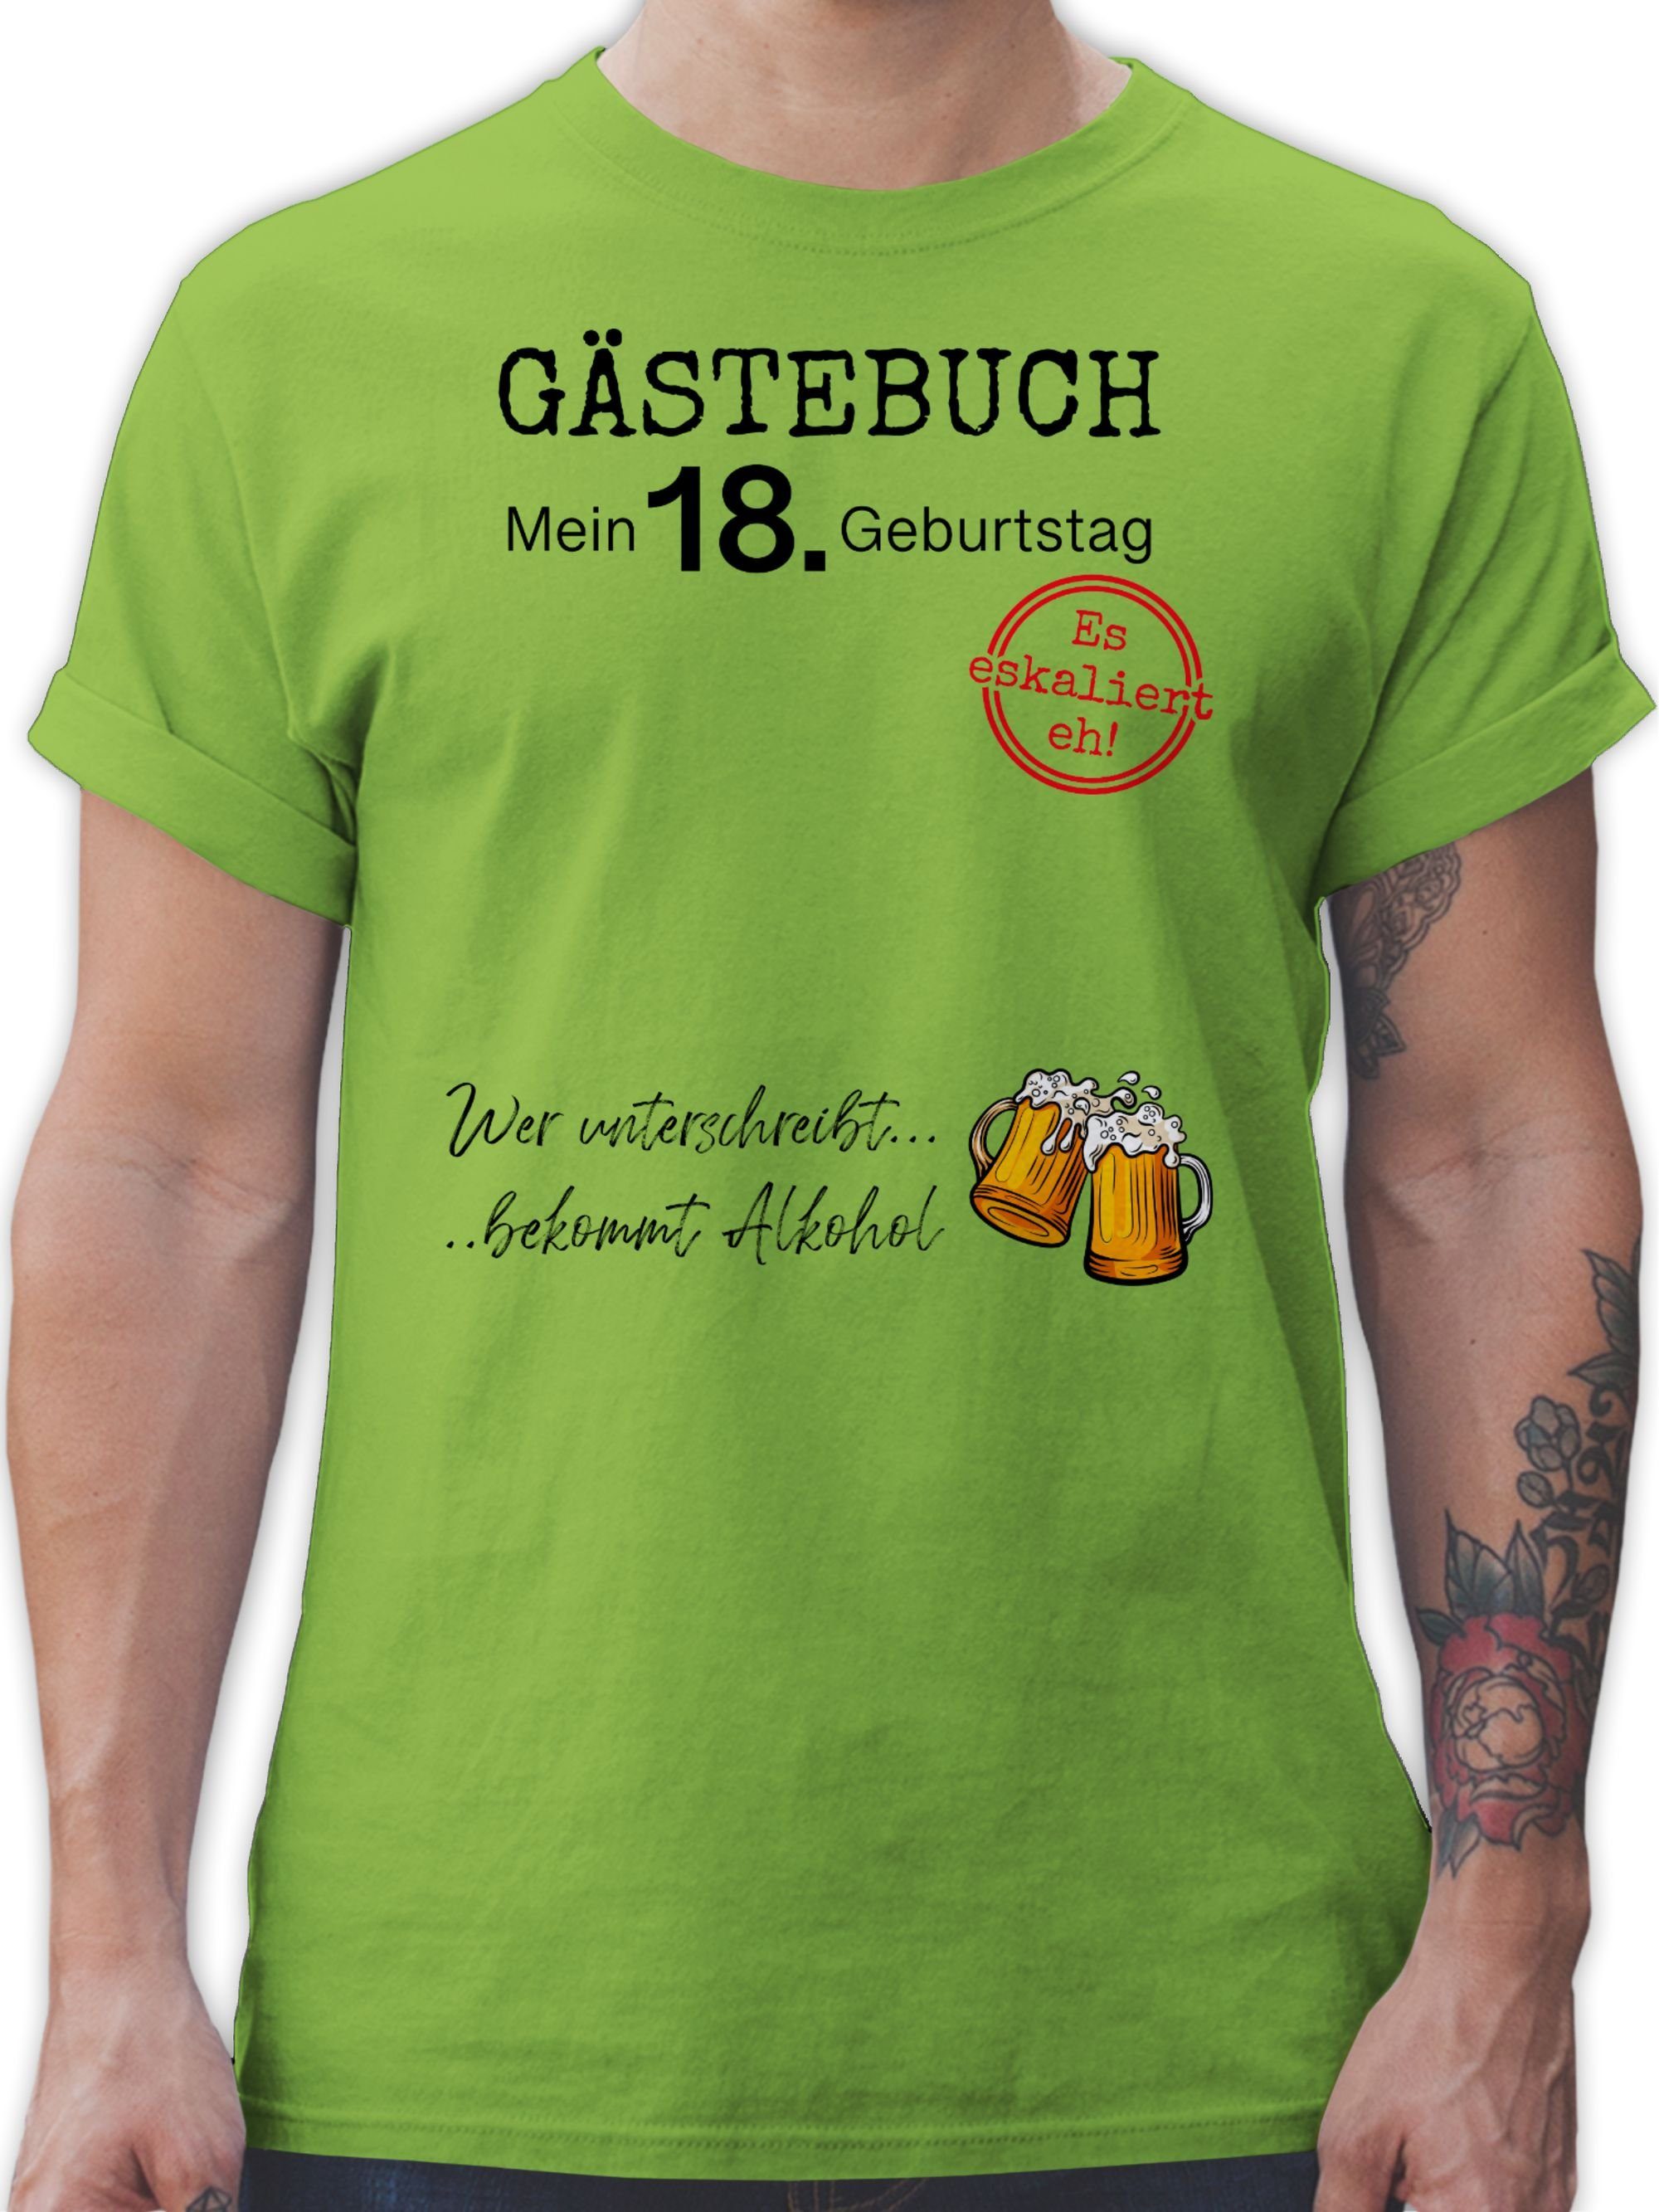 Geburtstag Geburtstag Gästebuch Shirtracer T-Shirt Hellgrün 18. 18. 1